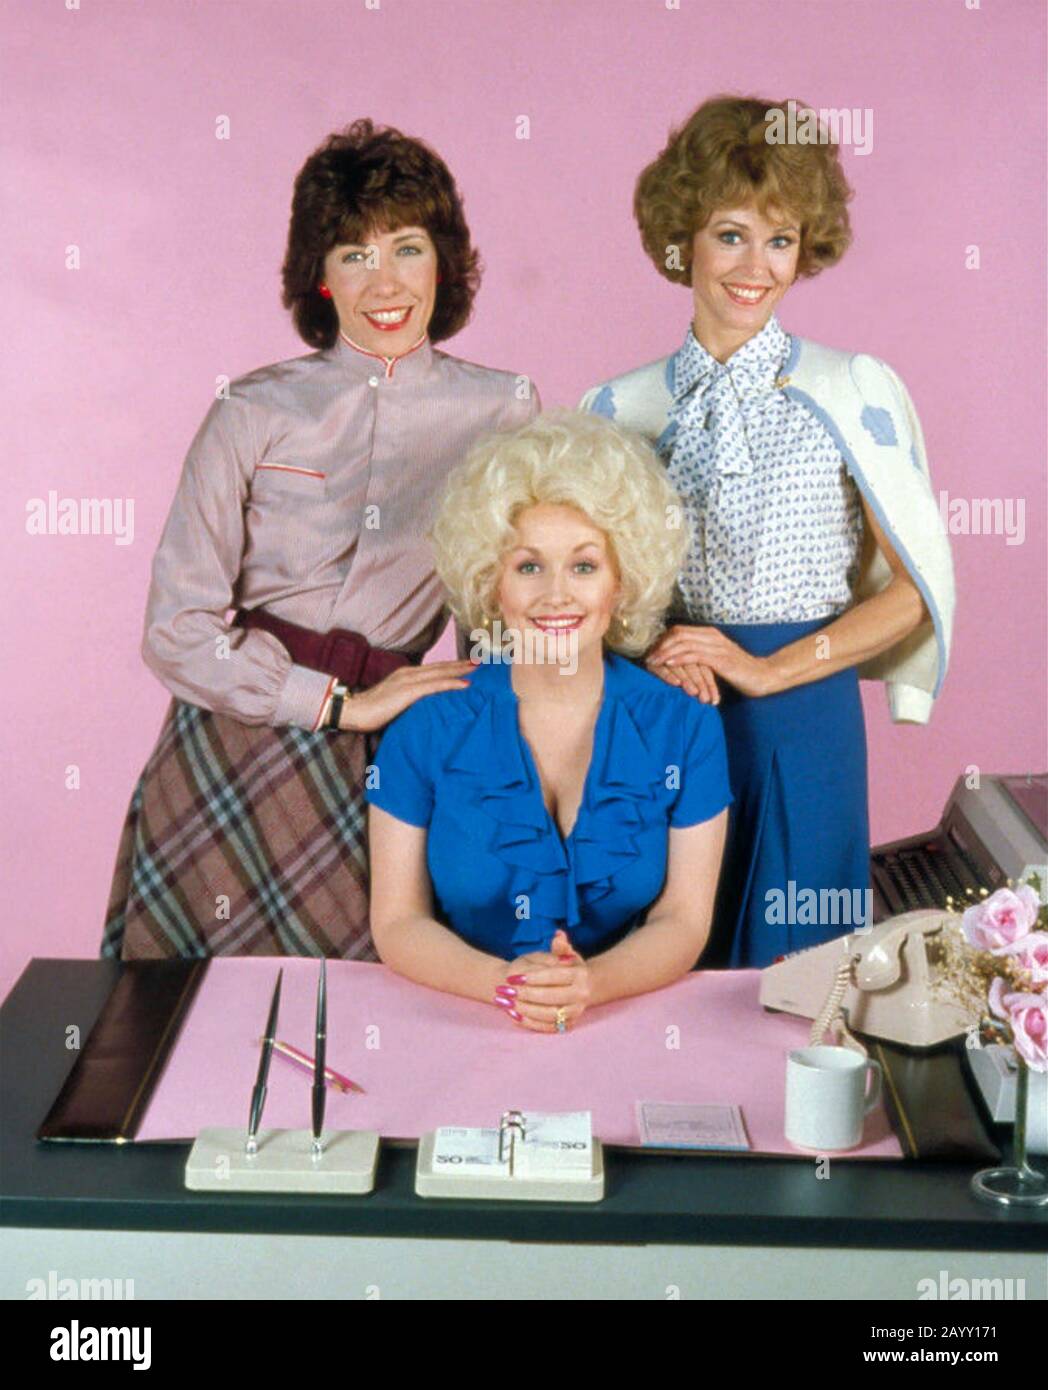 9 to 5 - 1980 20th Century Fox film with from left: Lily Tomlin, Dolly Parton, Jane Fonda. Stock Photo